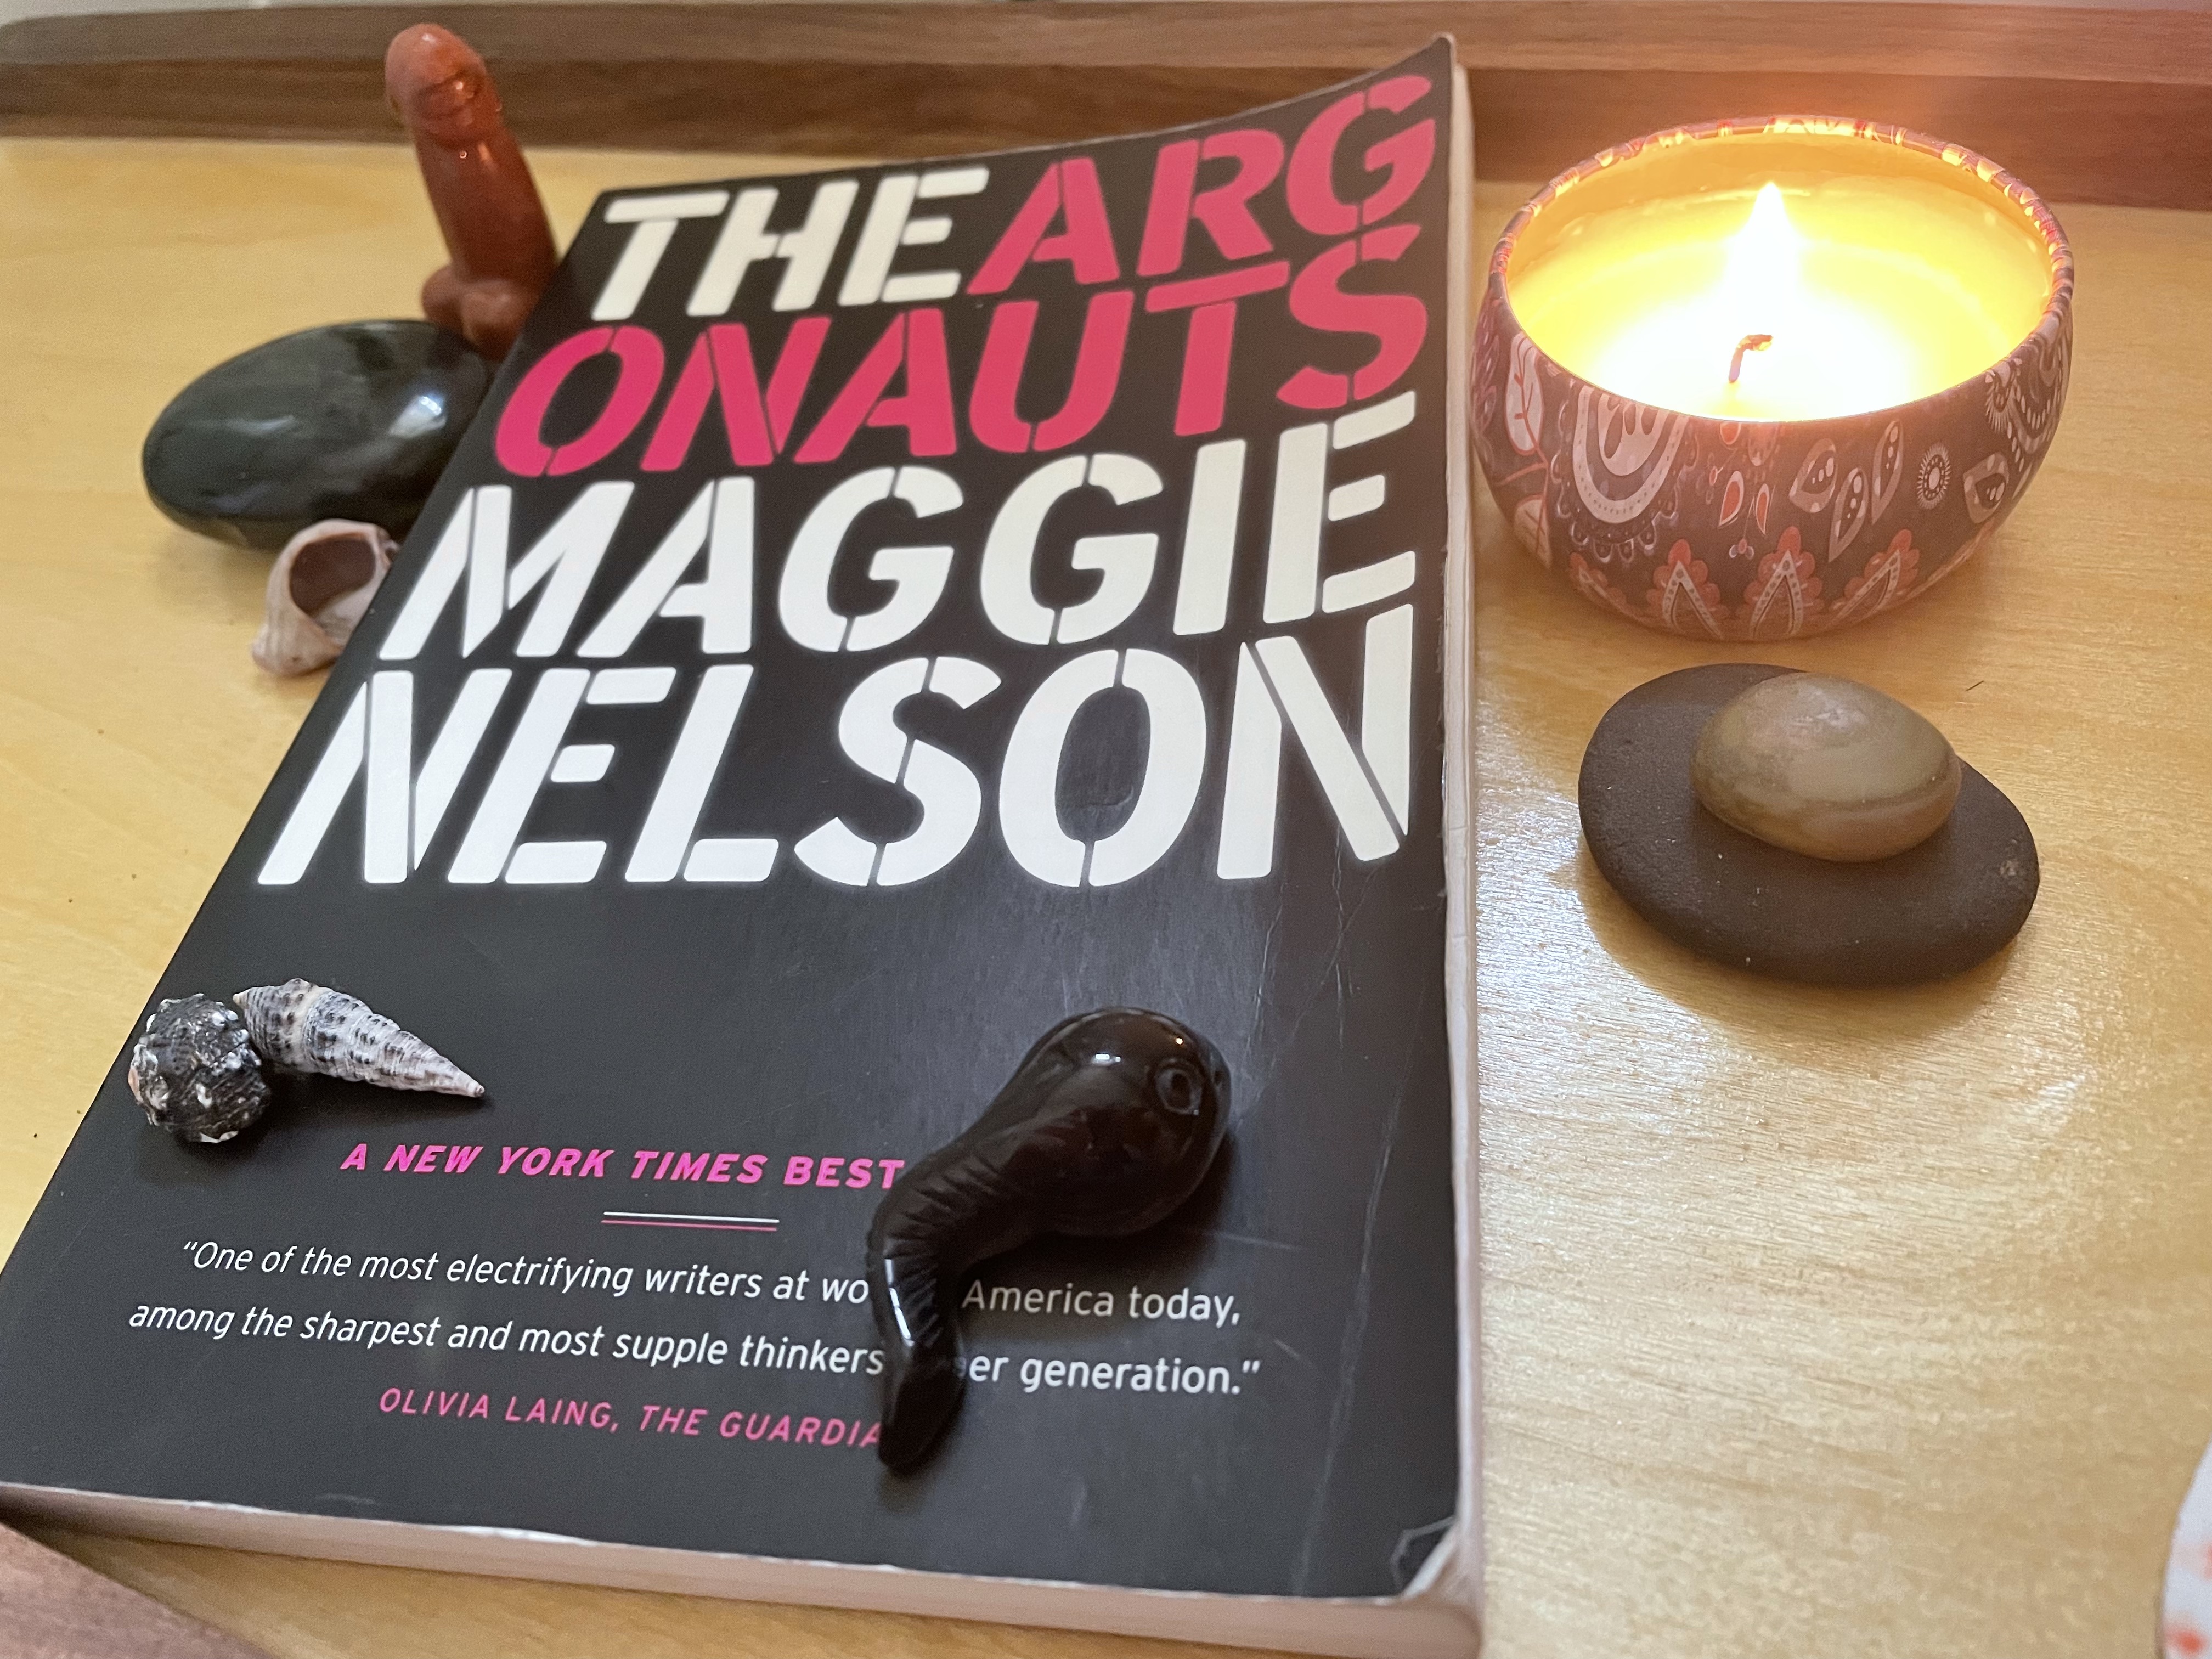 The Argonauts by Maggie Nelson